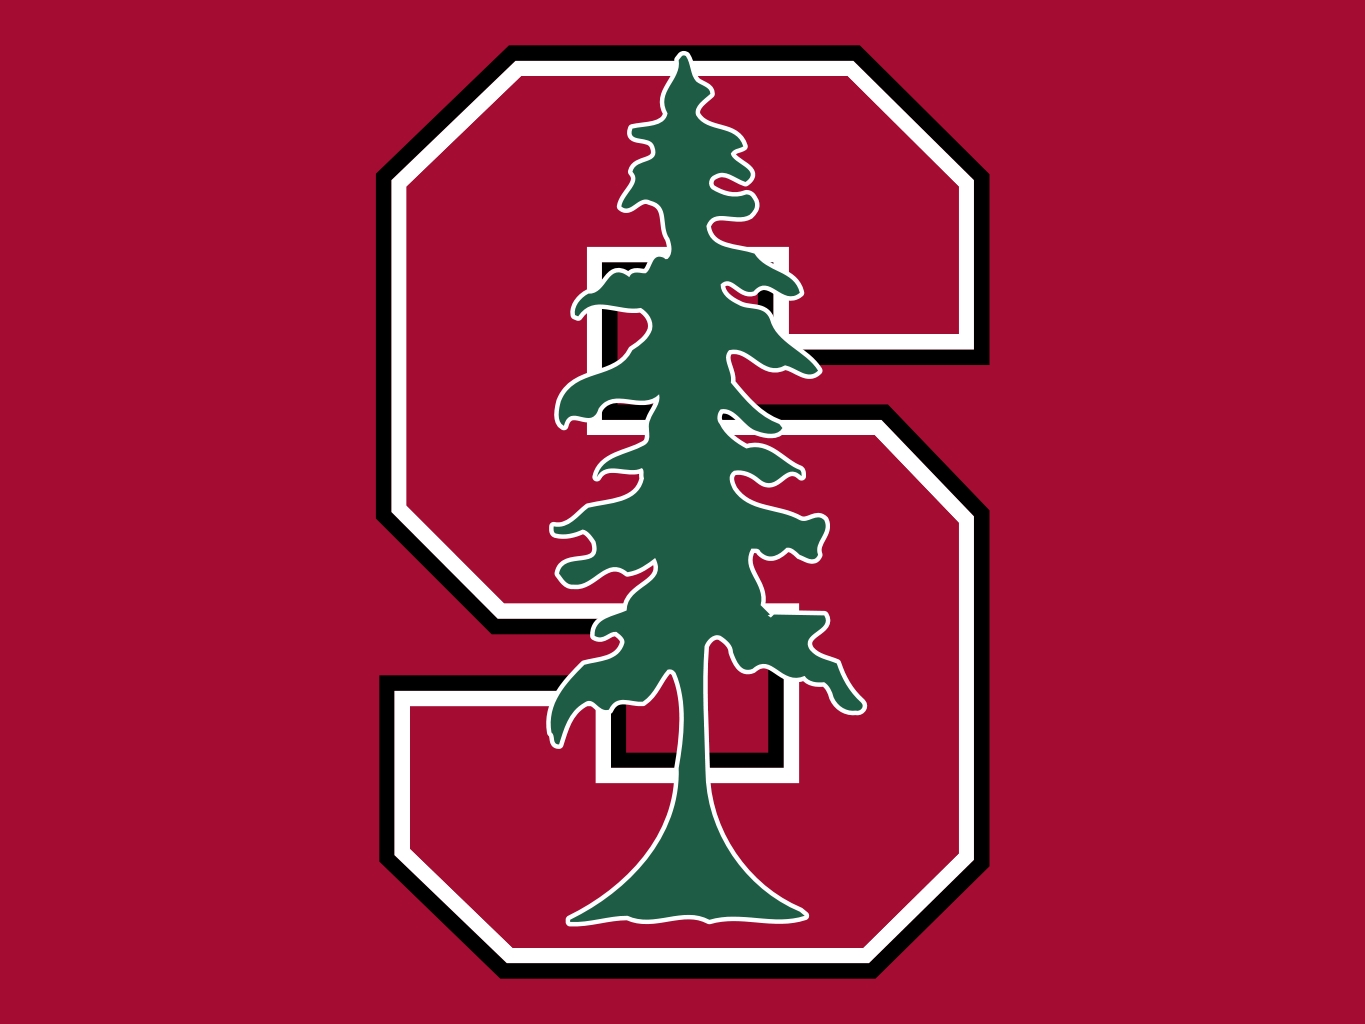 Stanford_logo